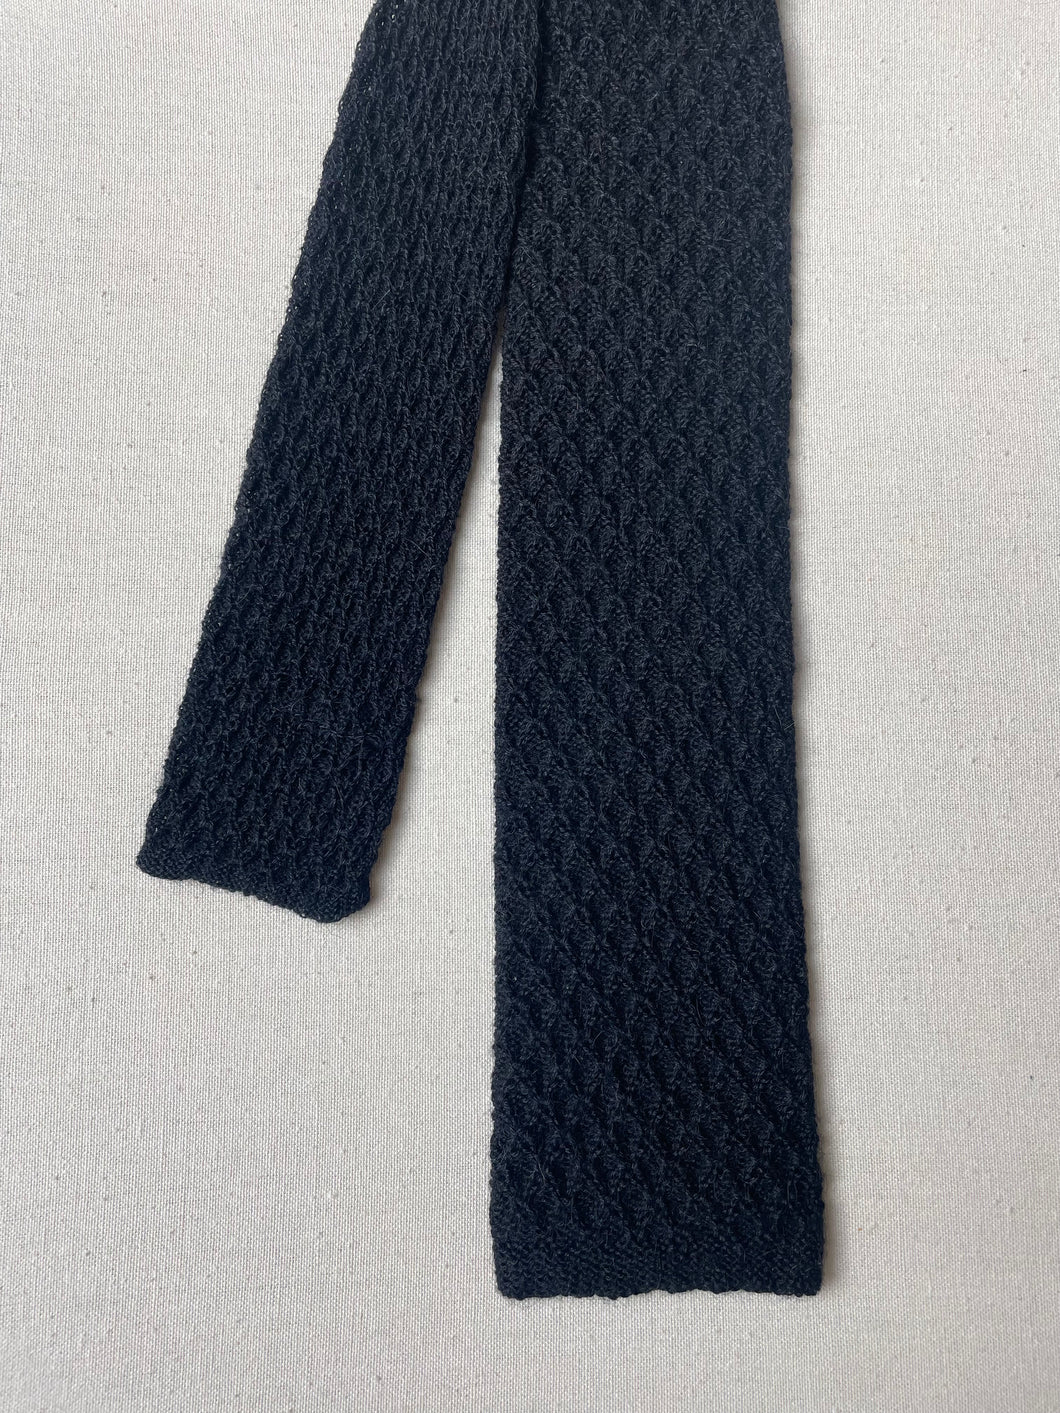 Cravate maille noire vintage large en alpaga et laine Made in Italy